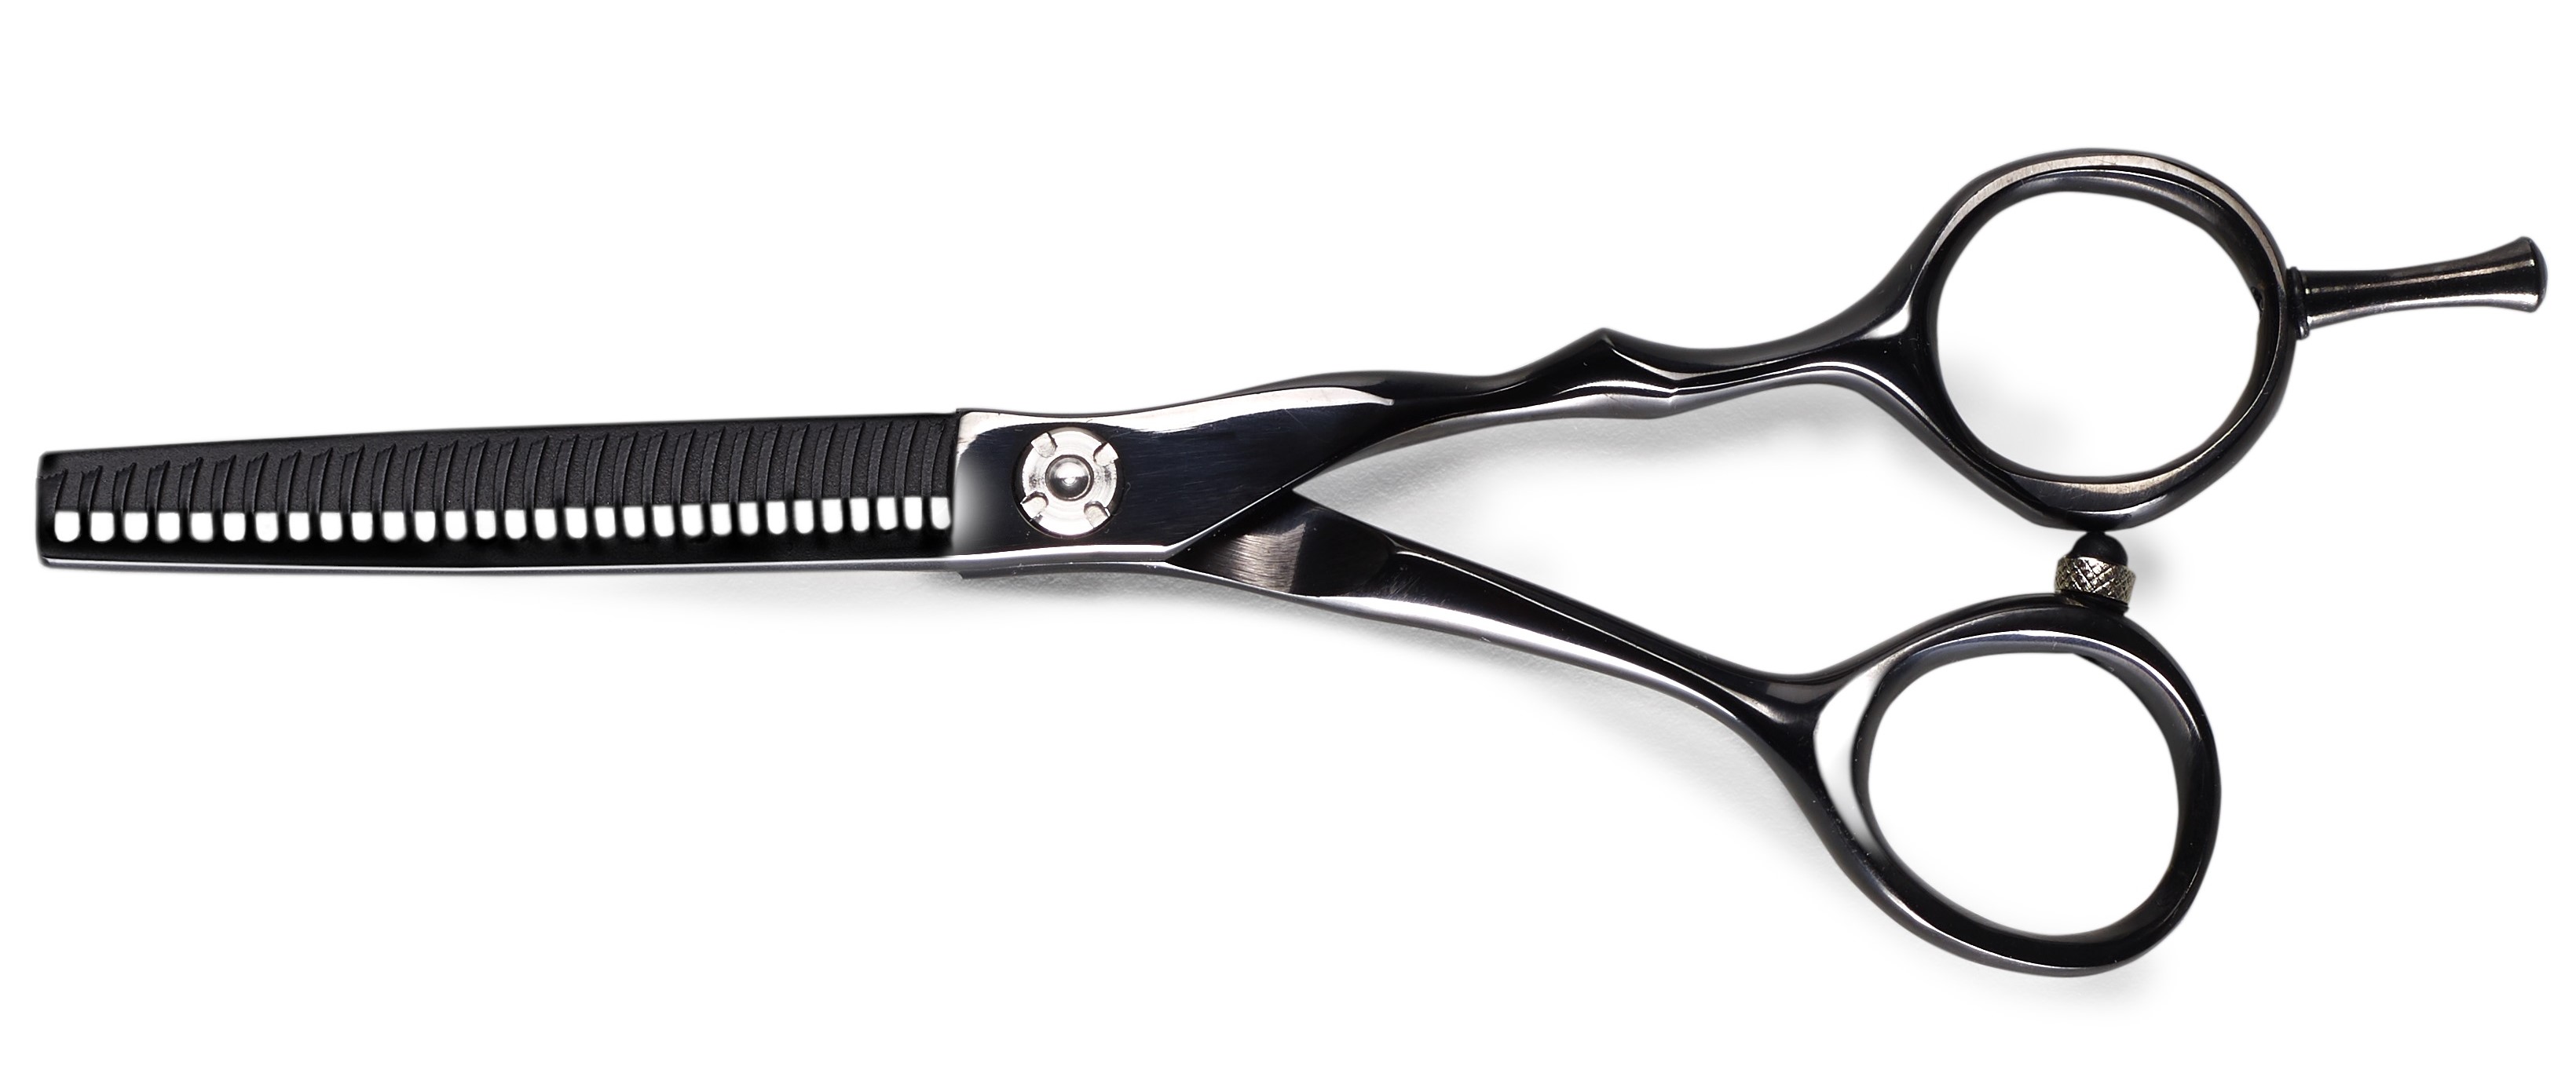 Kiepe Blending Scissors 30 Teeth Regular 2814T30 6″ - profesionálne efilačné nožnice